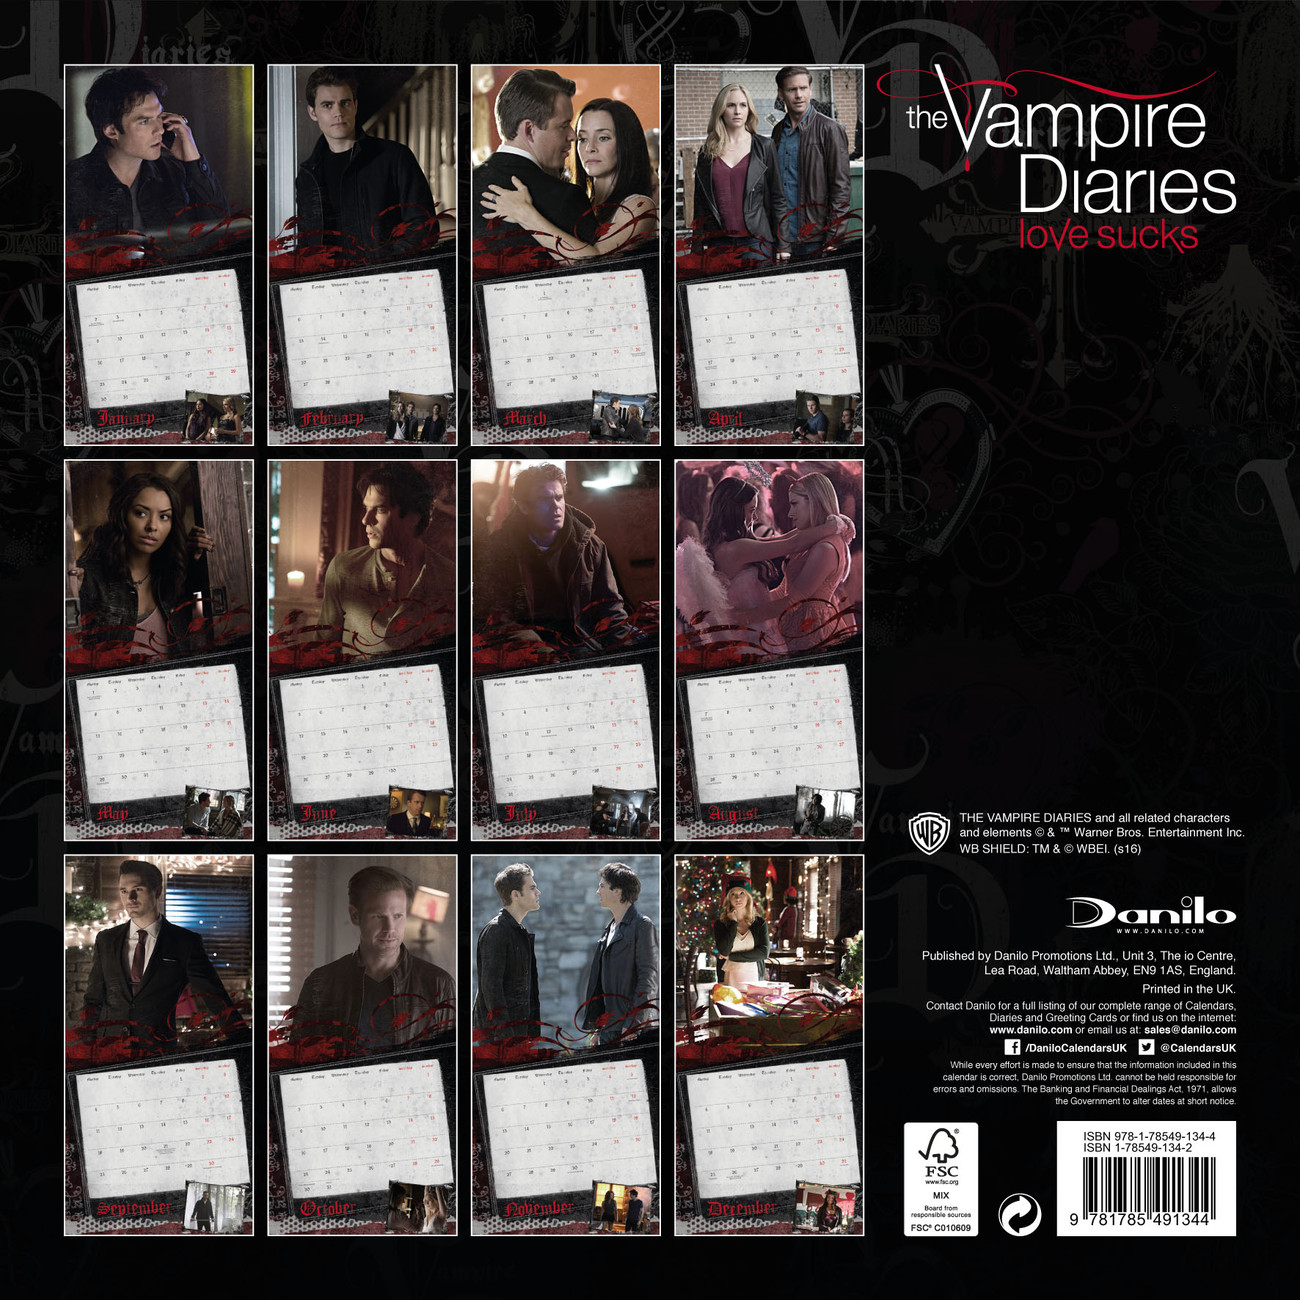 Vampire diaries Wall Calendars 2017 Buy at Europosters